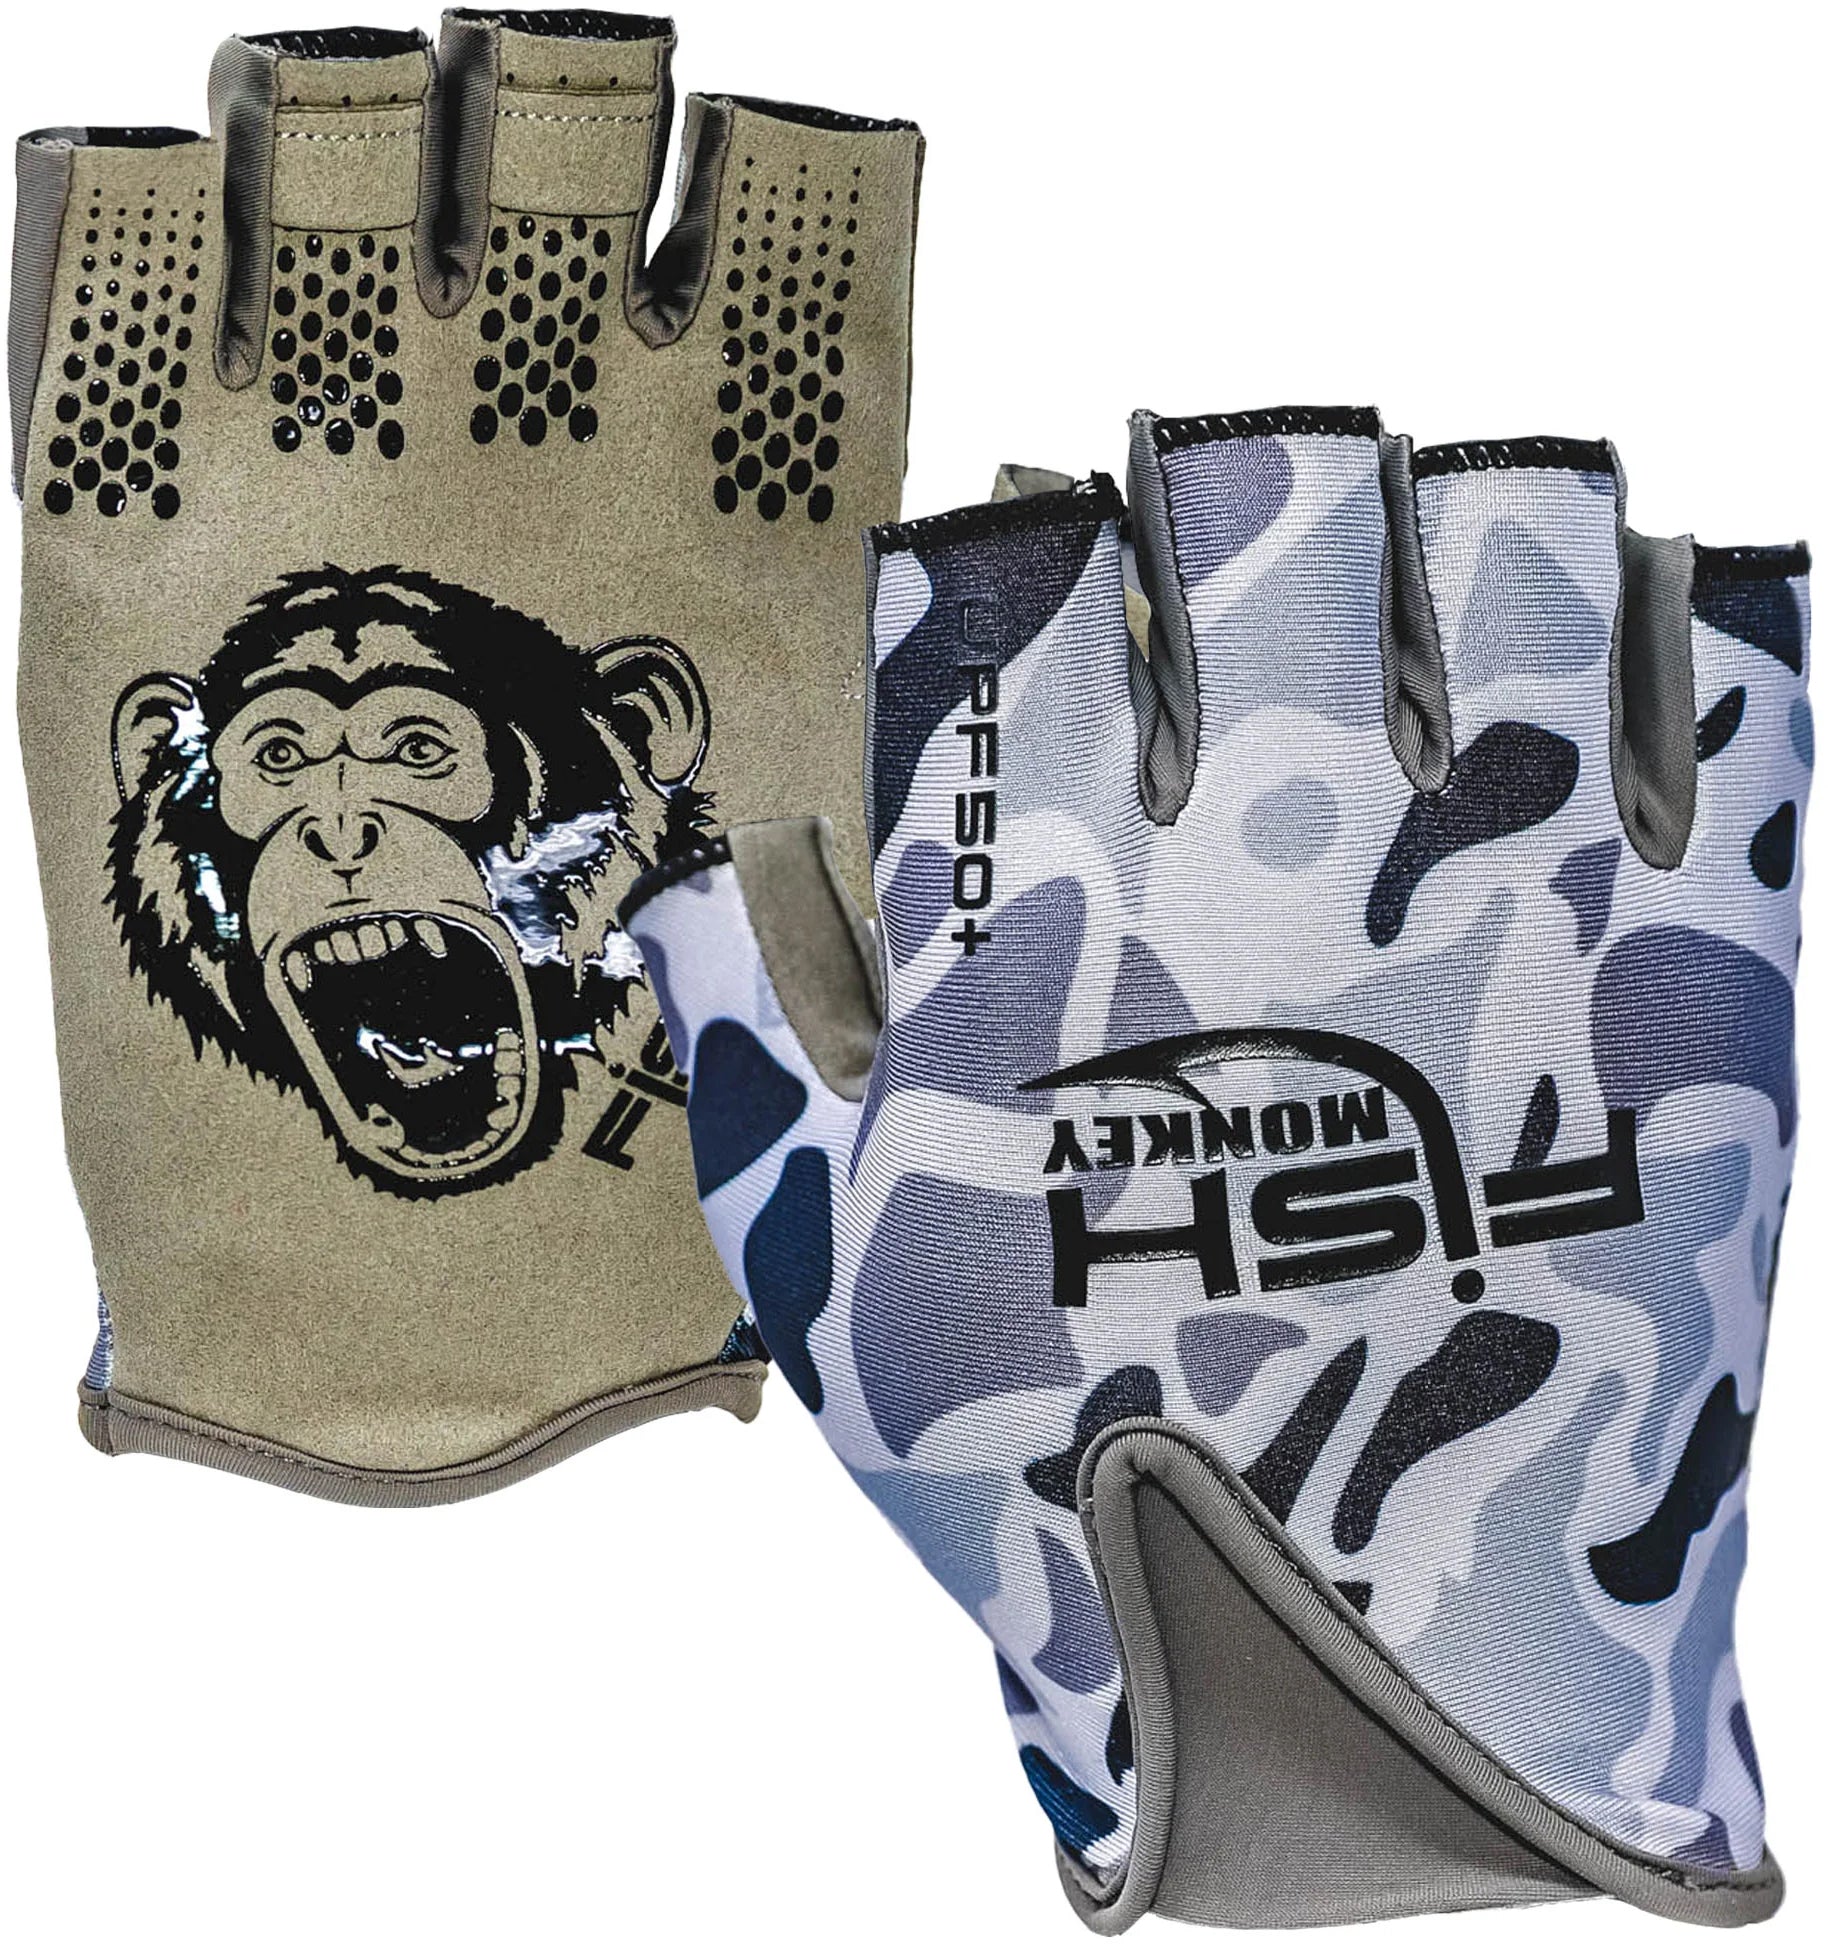 Fish Monkey Guide Glove 2XL Pro 365 Light Grey